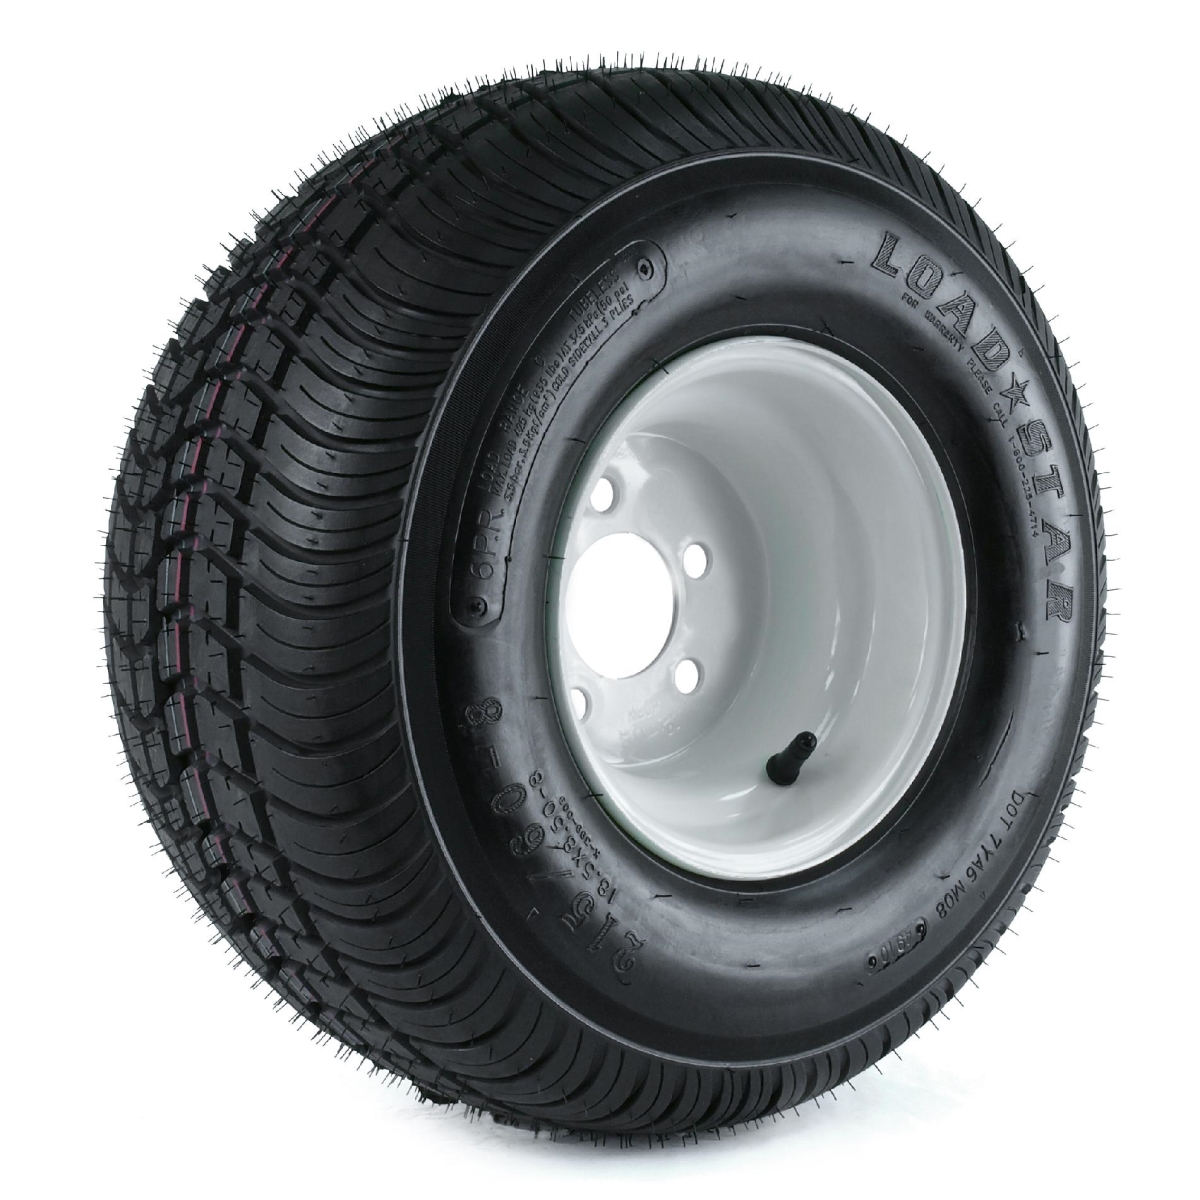 Picture of Martin Wheel 274432 570 x 8 Load Range B Trailer Tire